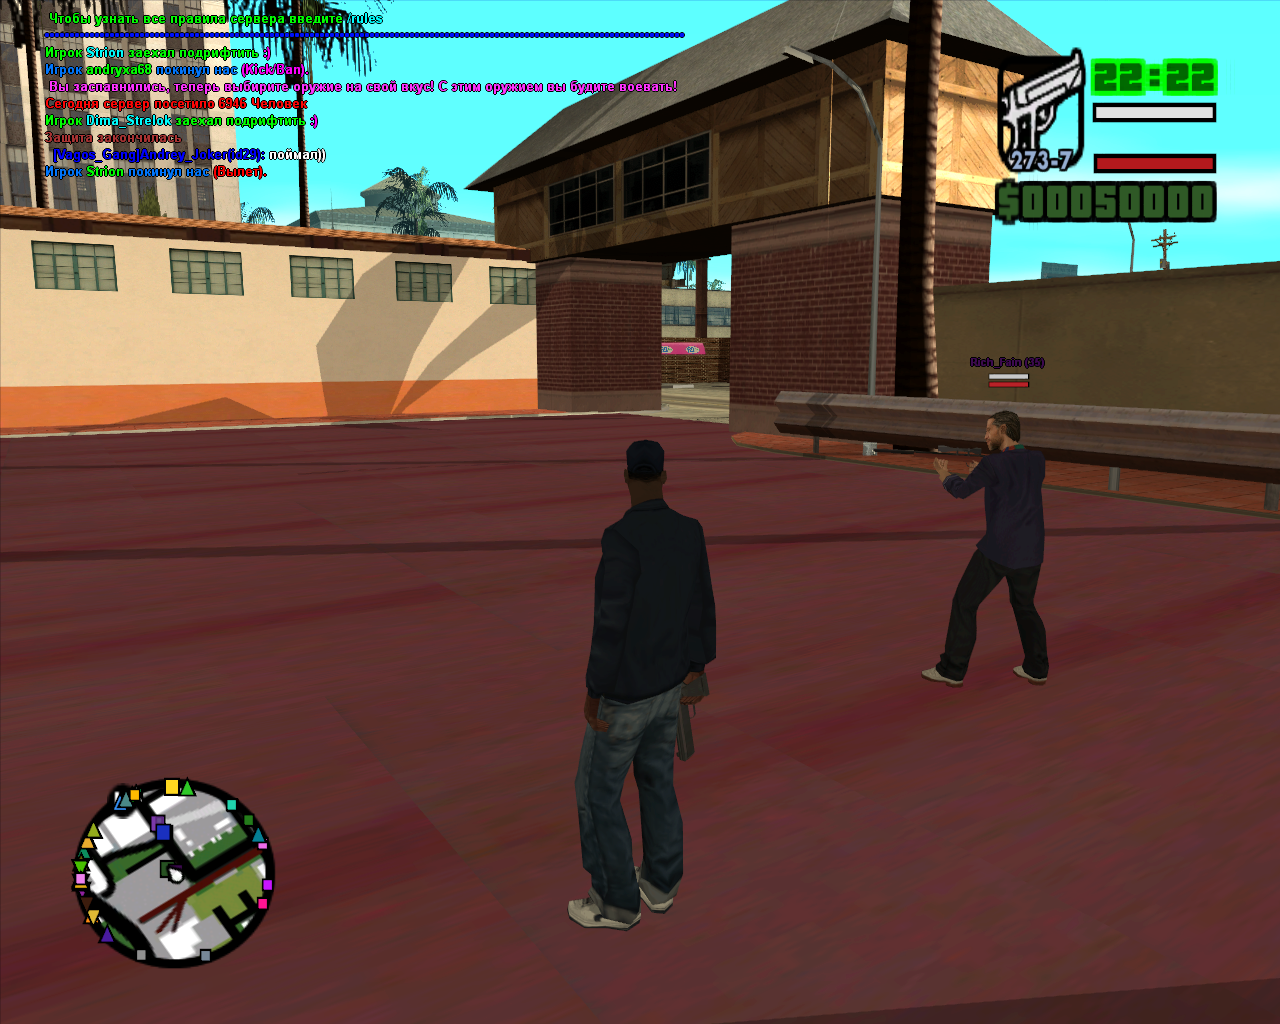 San andreas multiplayer 0.3 7. Grand Theft auto San Andreas 2005. ГТА Сан андреас SAMP. Grand Theft auto San Andreas мультиплеер. ГТА Сан андреас 2005 года.